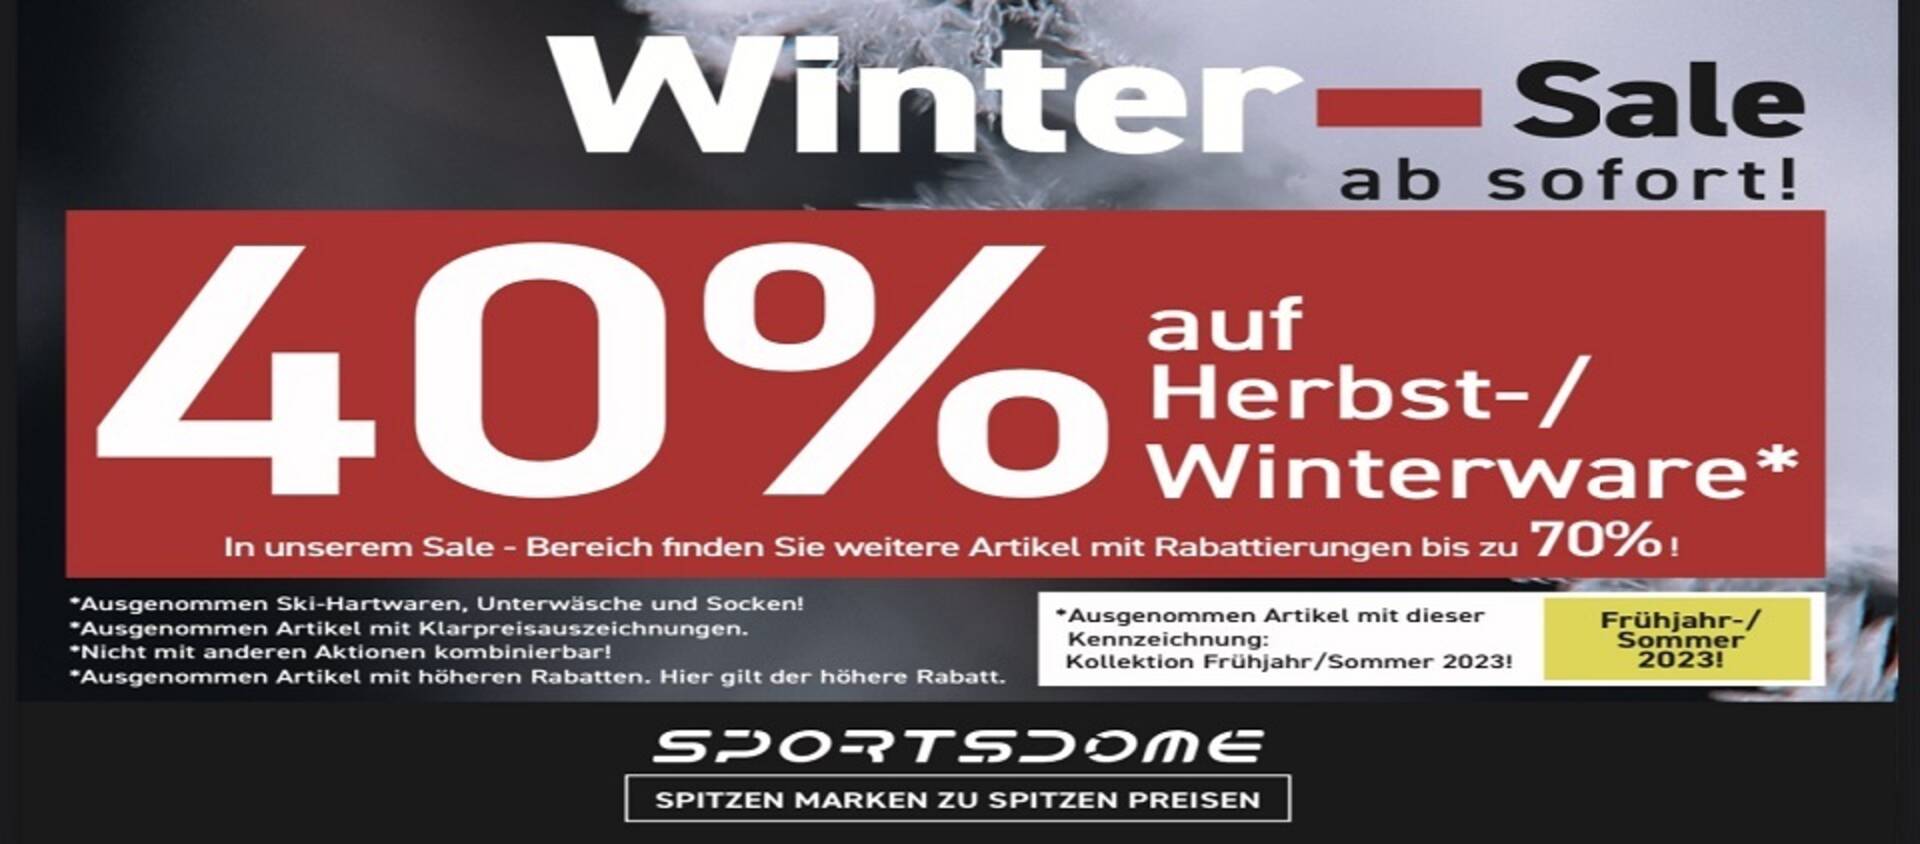 Winter-Sale!